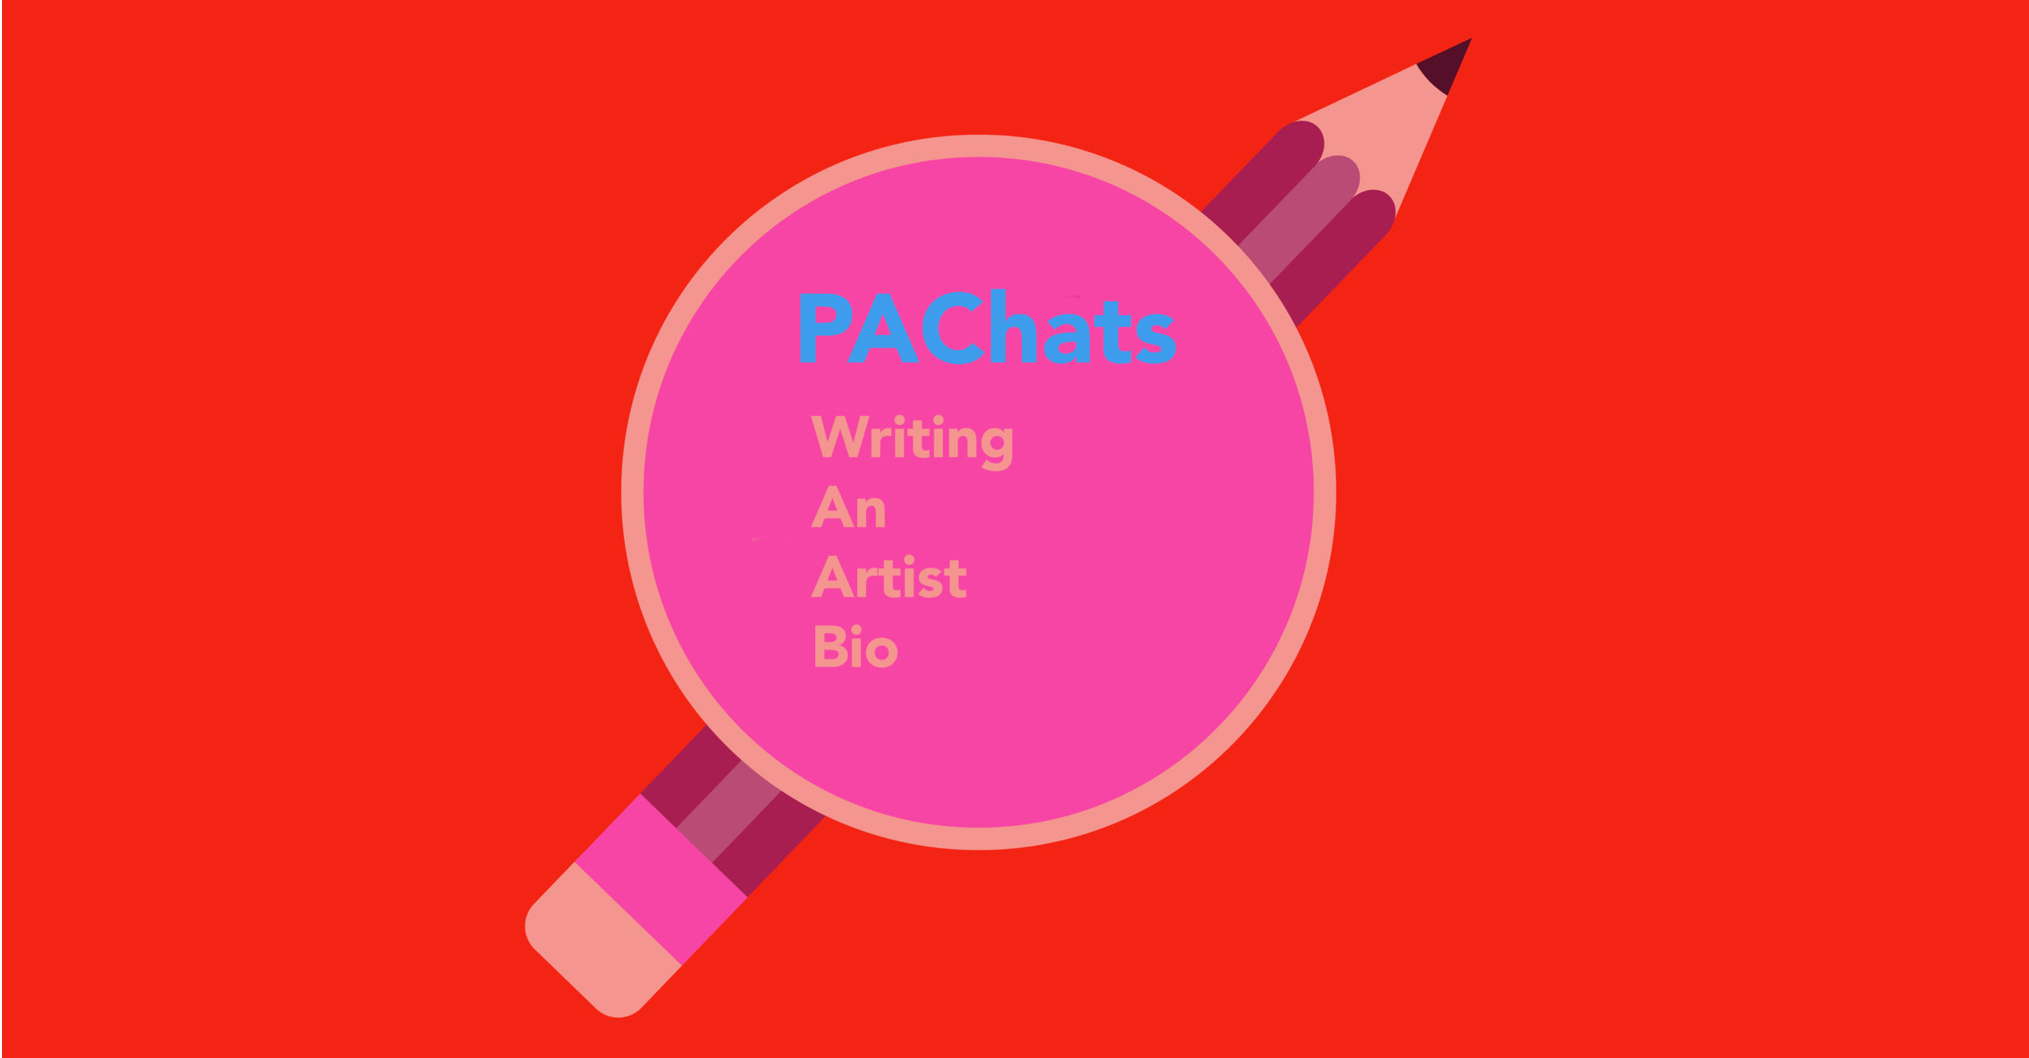 PAChats Professional Artist Chats Writing an Artist Bio